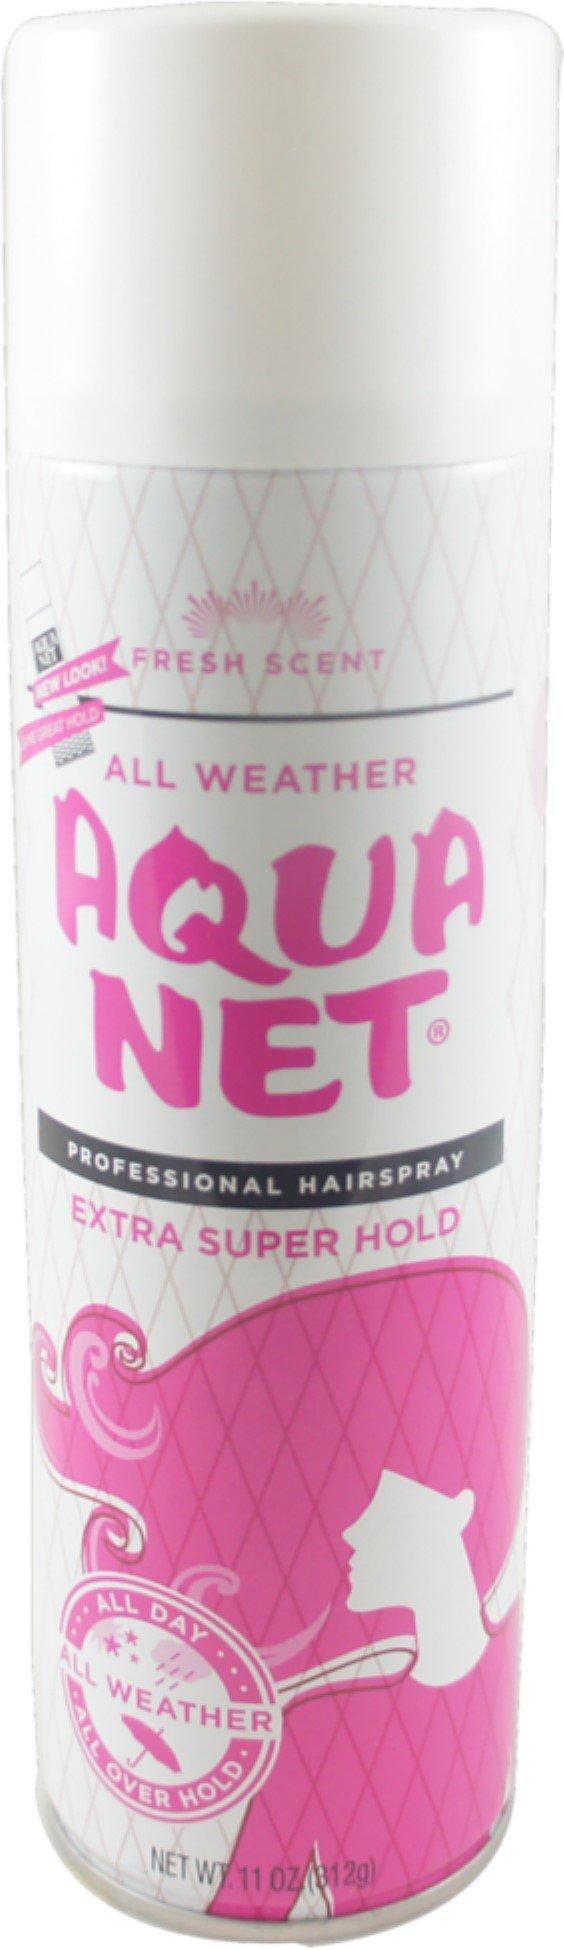 Aqua Net Professional Hair Spray Extra Super Hold Fresh Fragrance